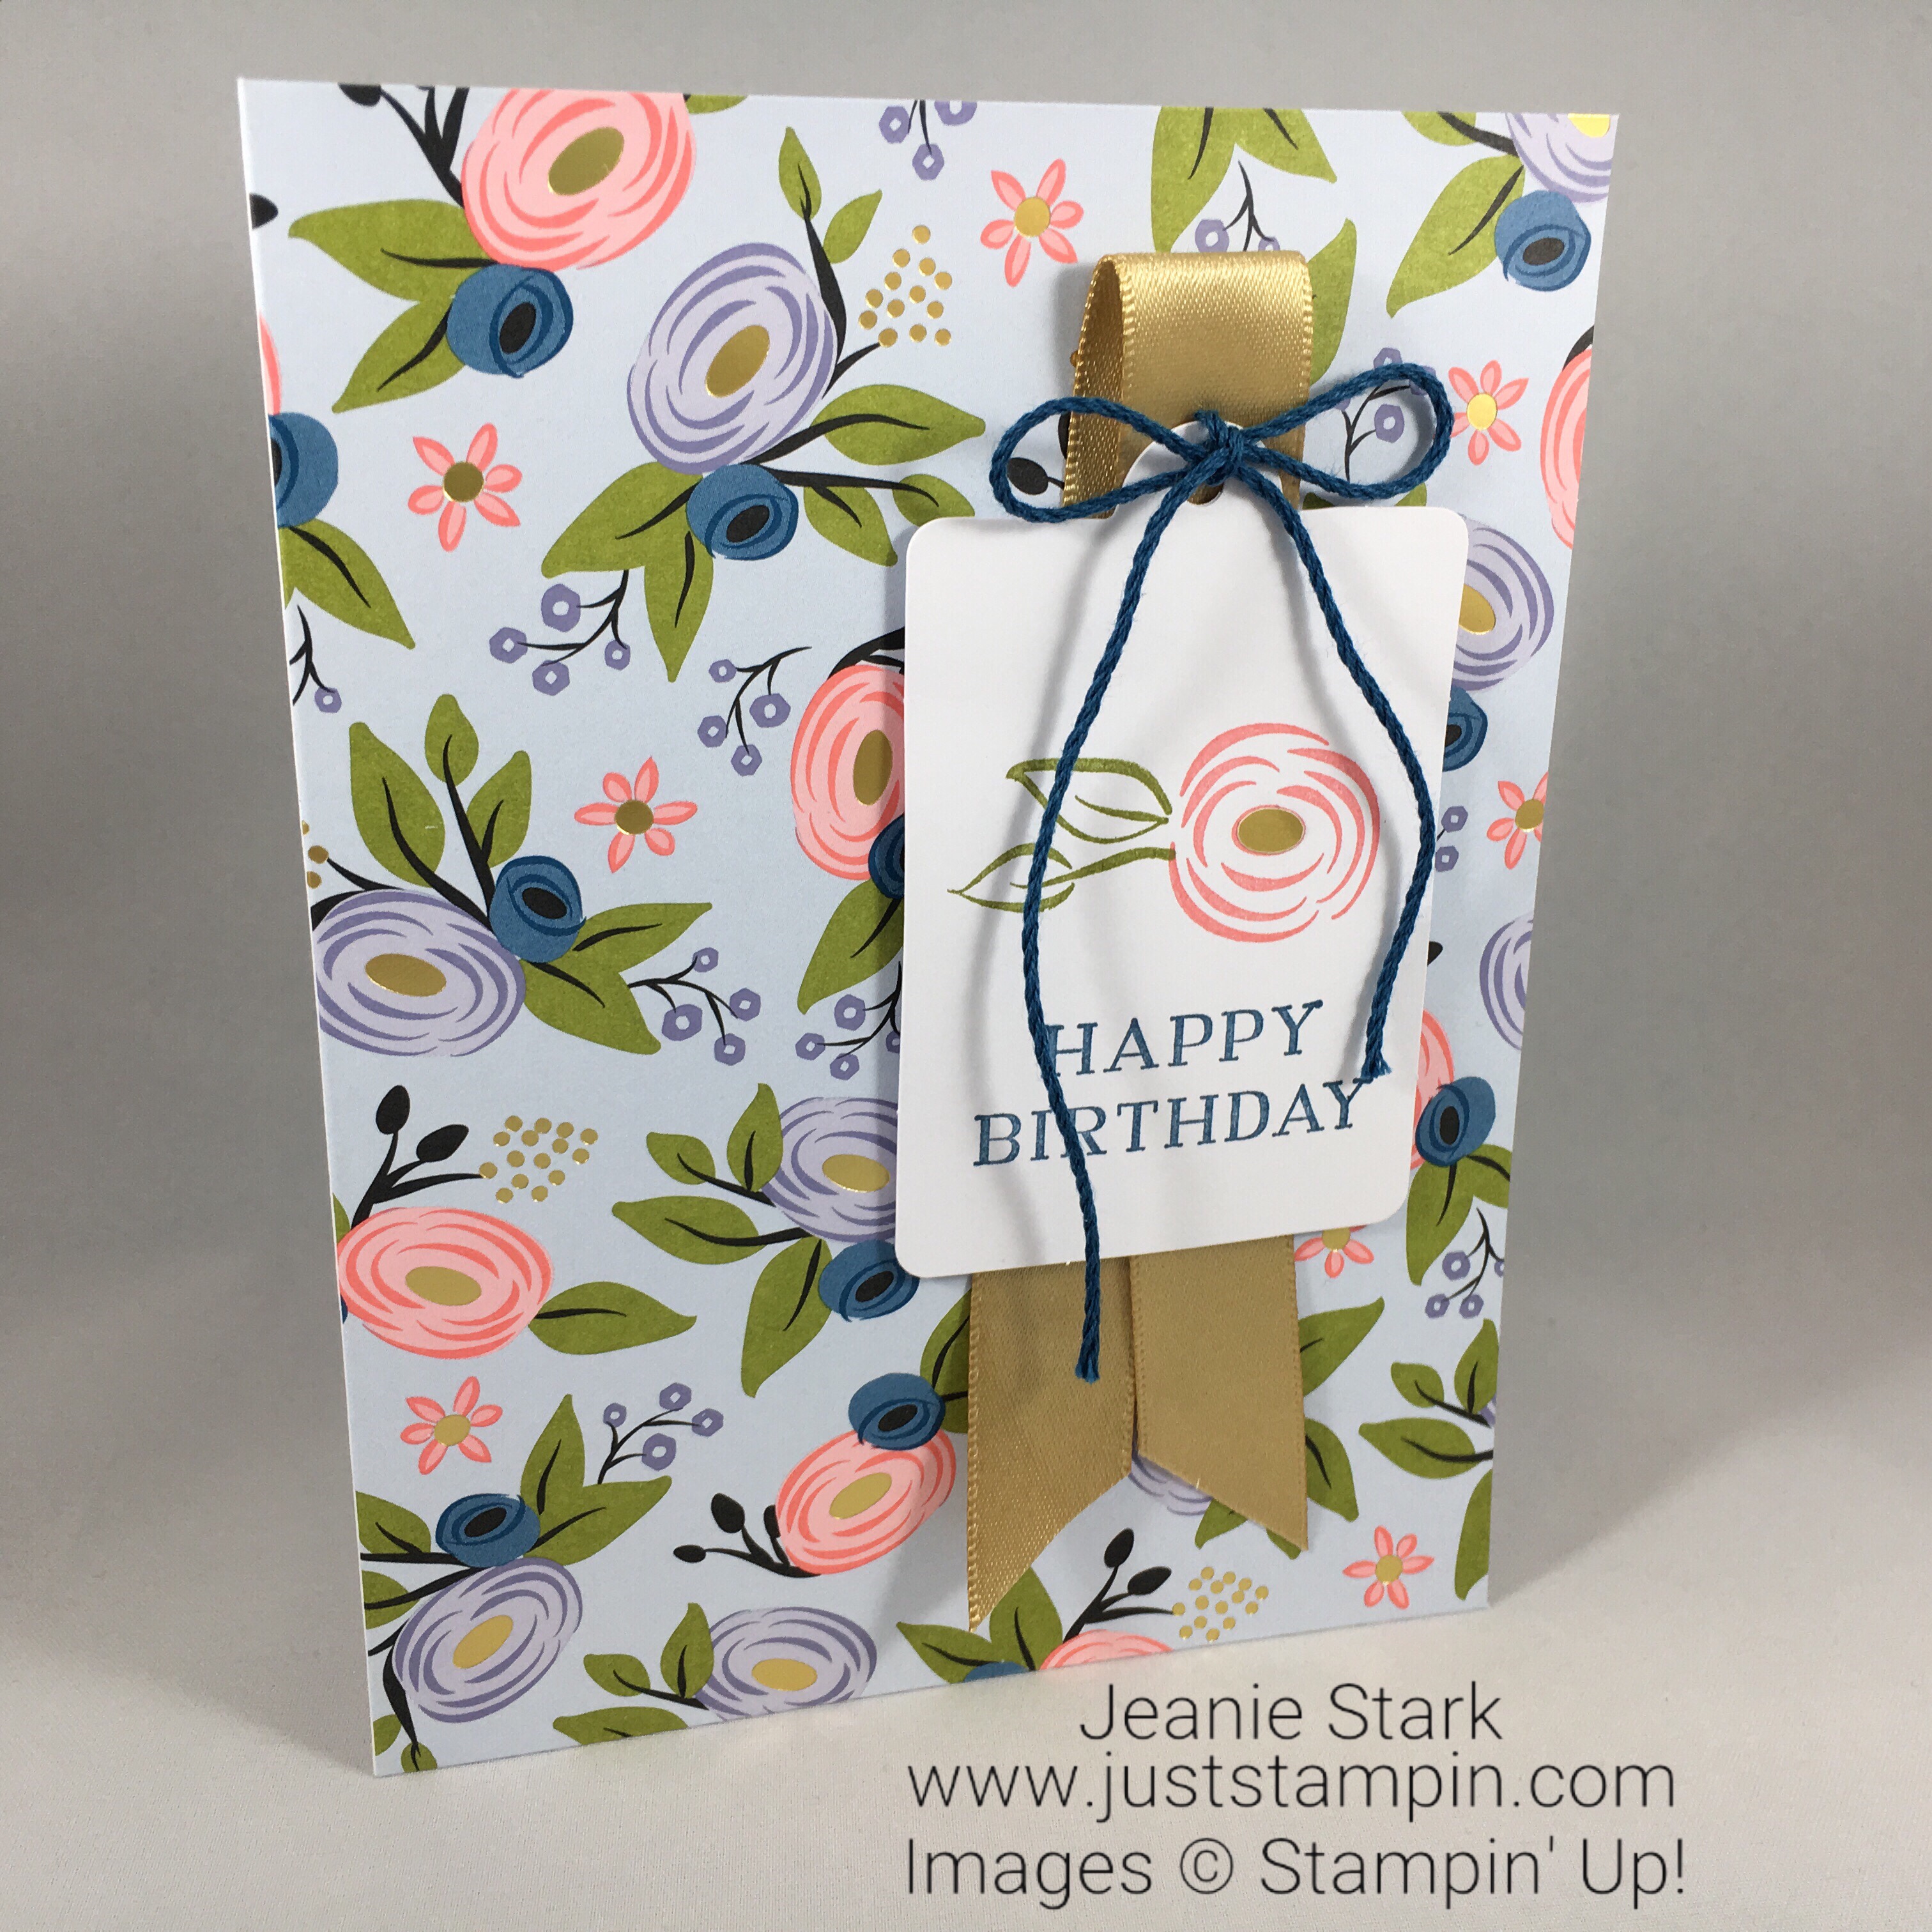 Stampin Up Perennial Birthday Card idea - Jeanie Stark StampinUp